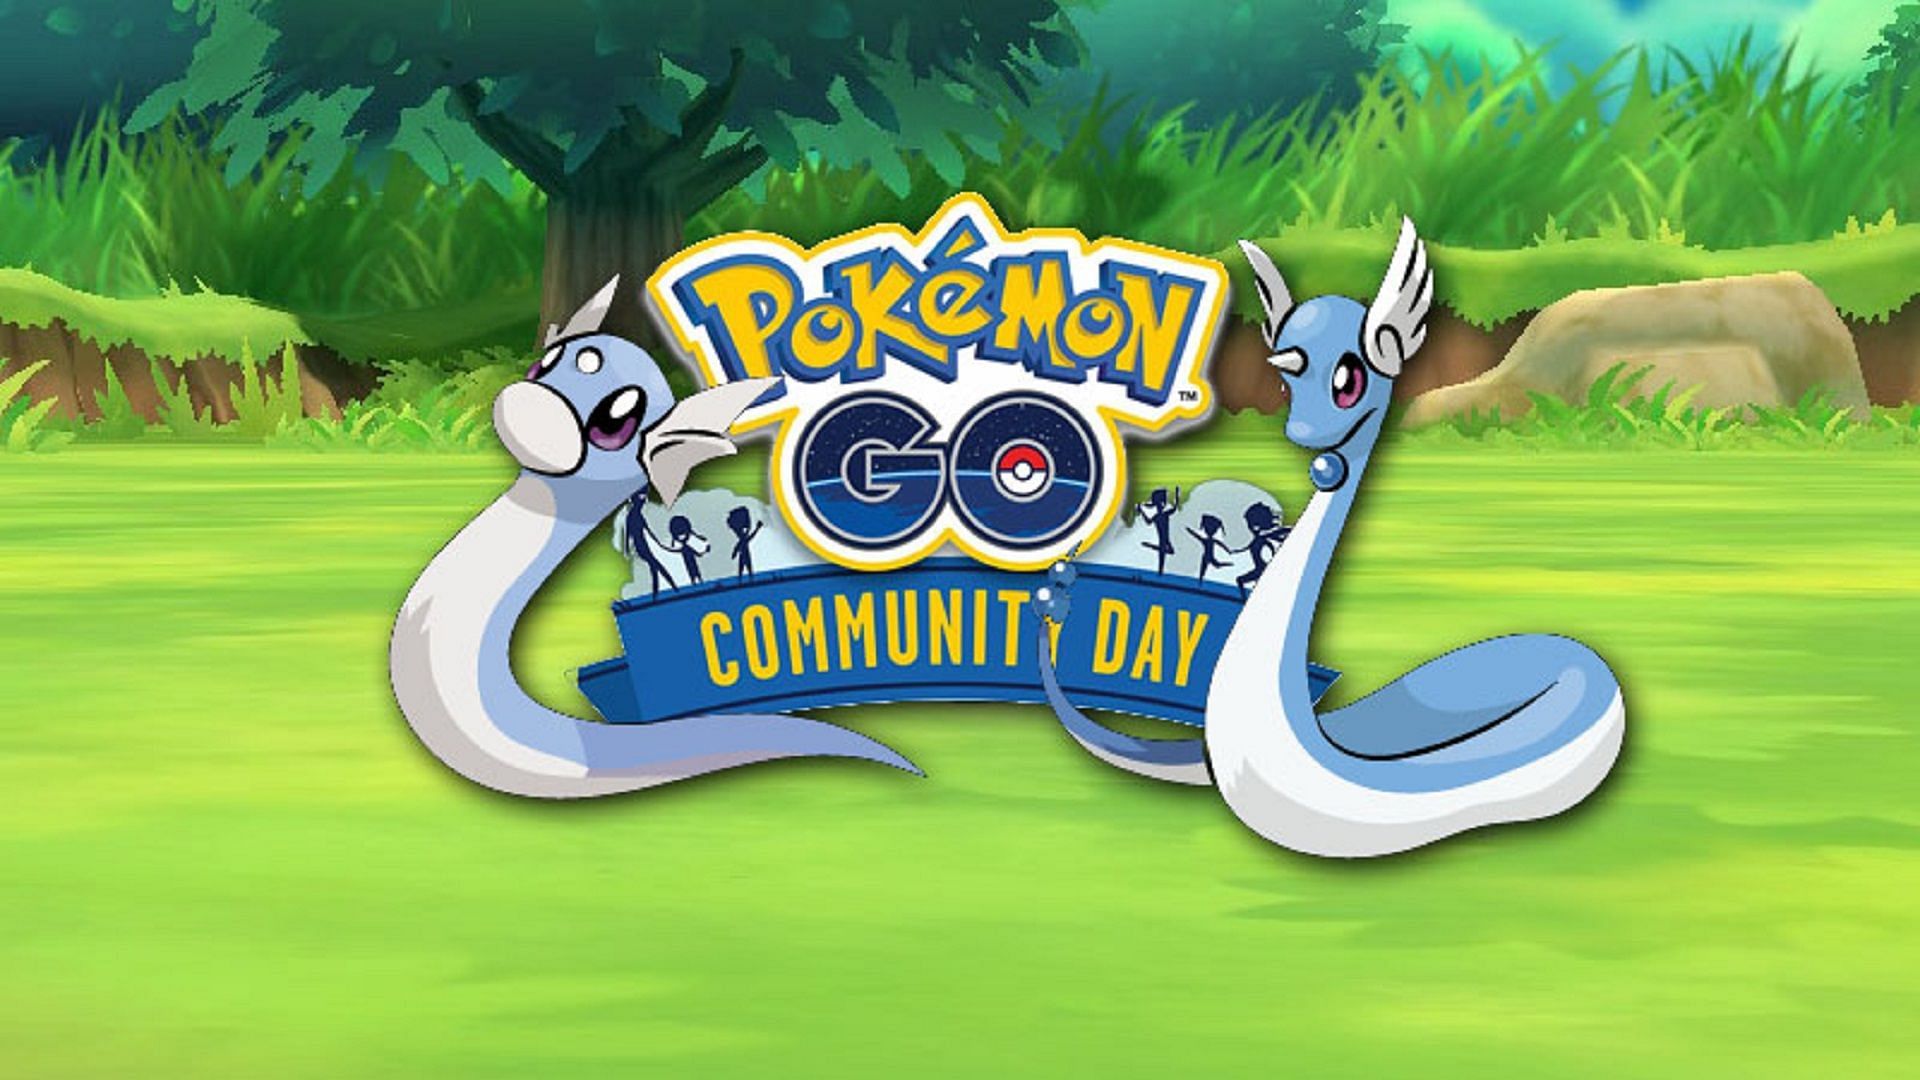 Niantic, please listen to the Pokémon GO community